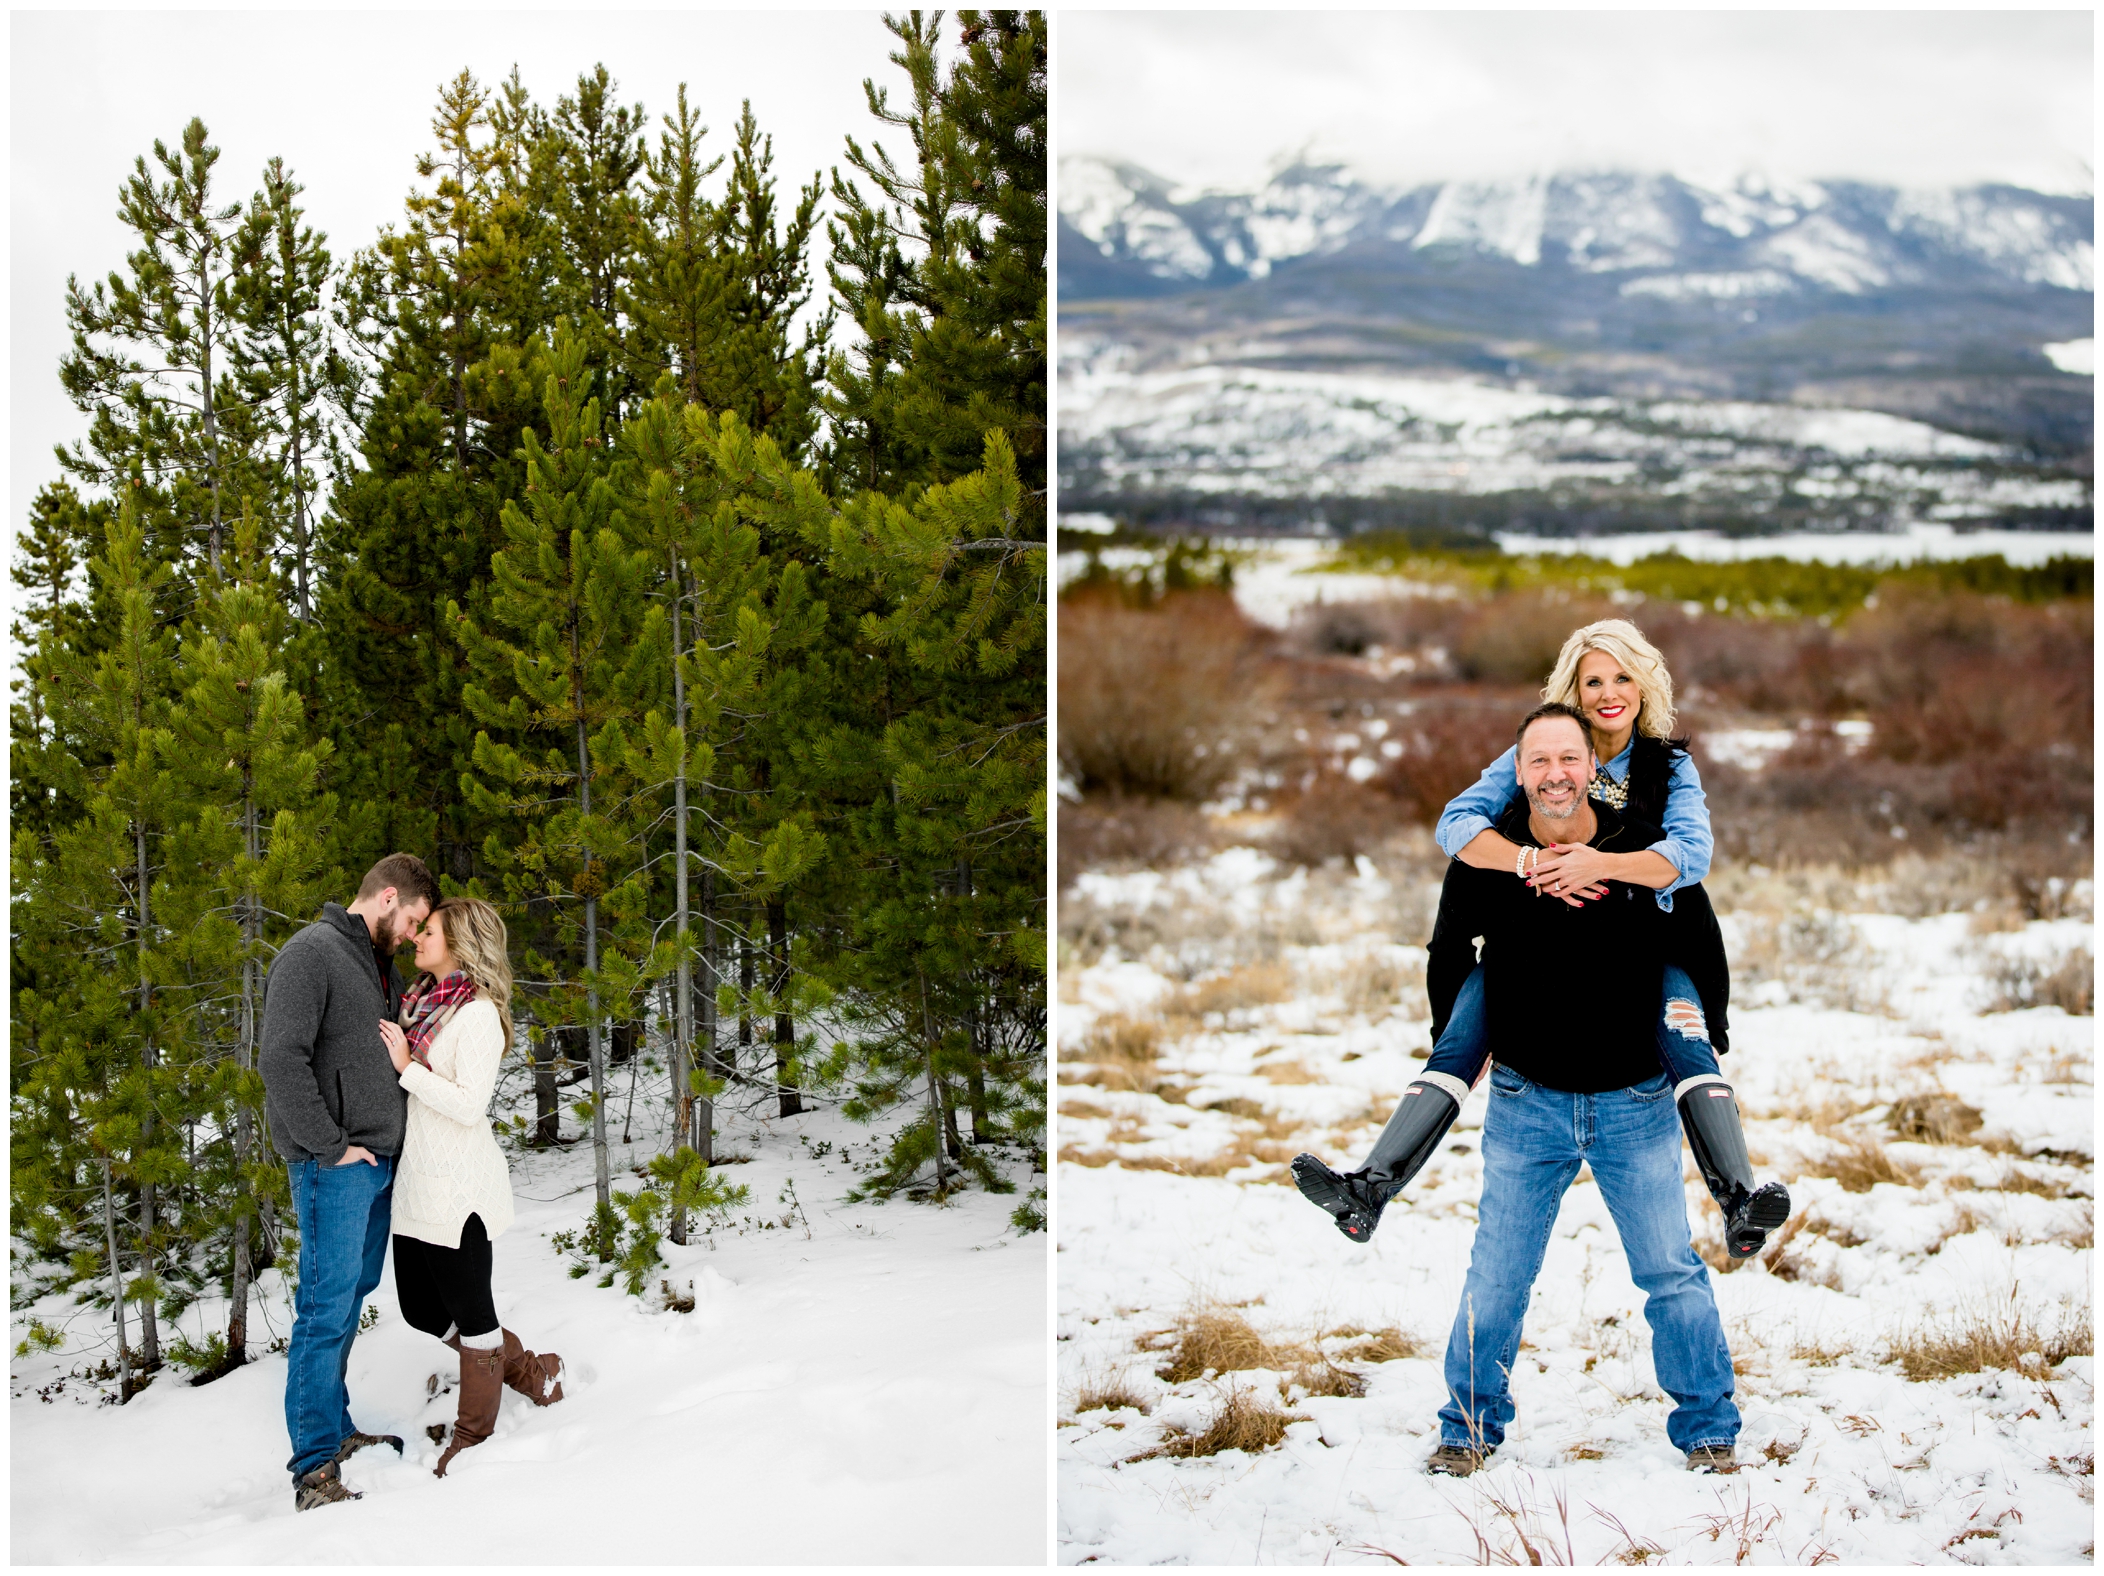 Colorado winter snow portraits by Breckenridge family photographers Plum Pretty Photography 